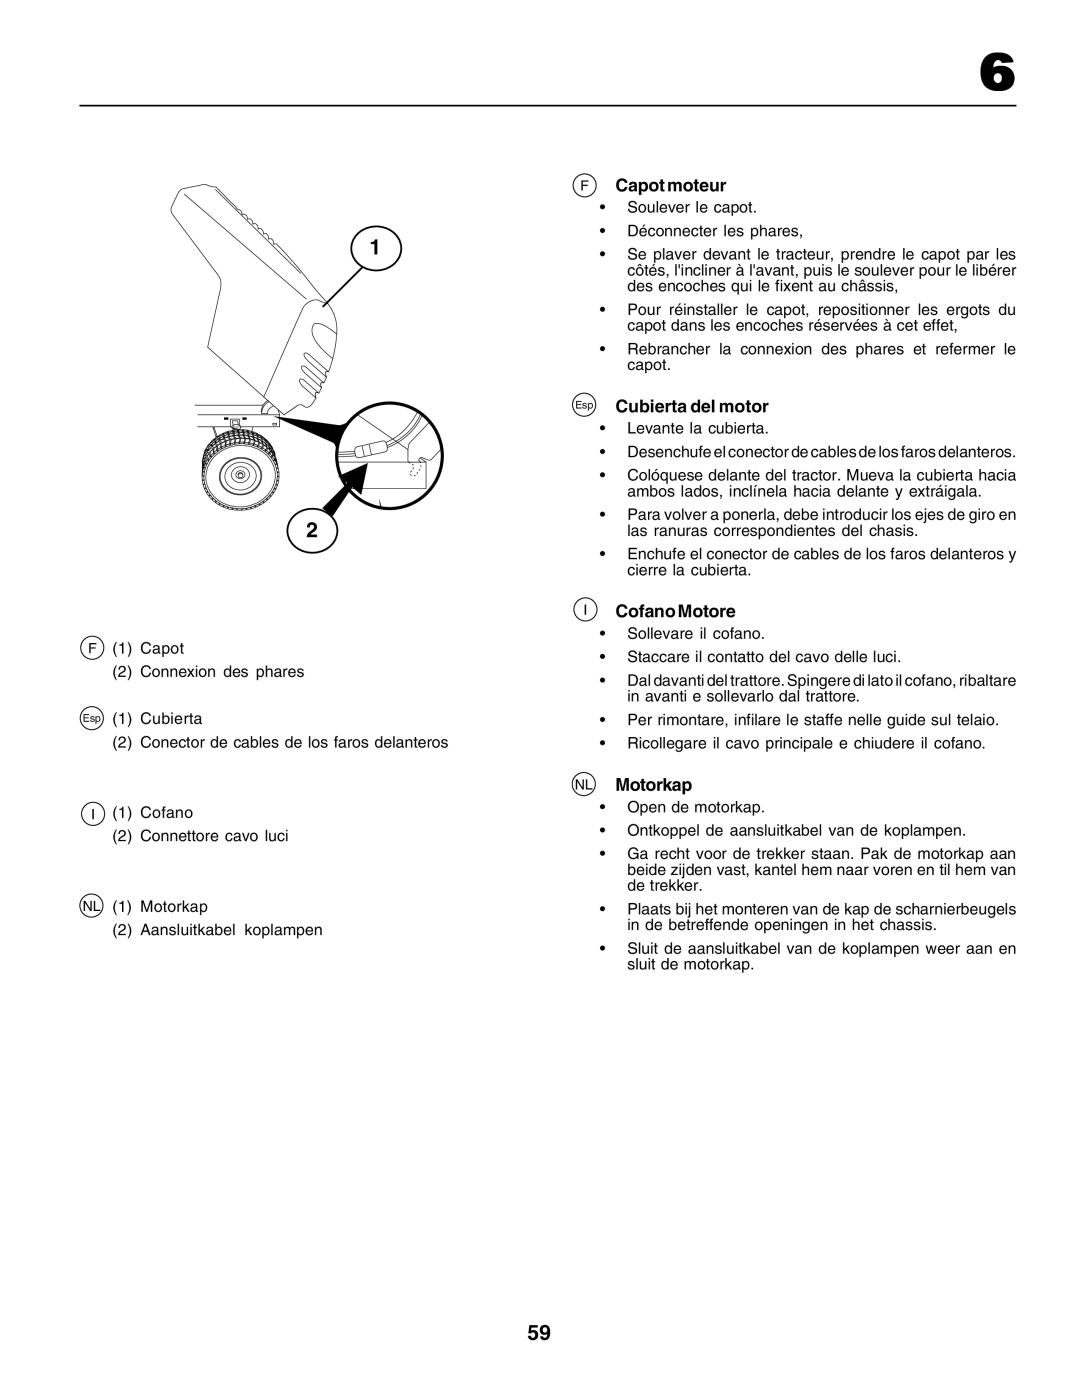 Husqvarna CT135 instruction manual FCapot moteur, Esp Cubierta del motor, Cofano Motore, NL Motorkap 